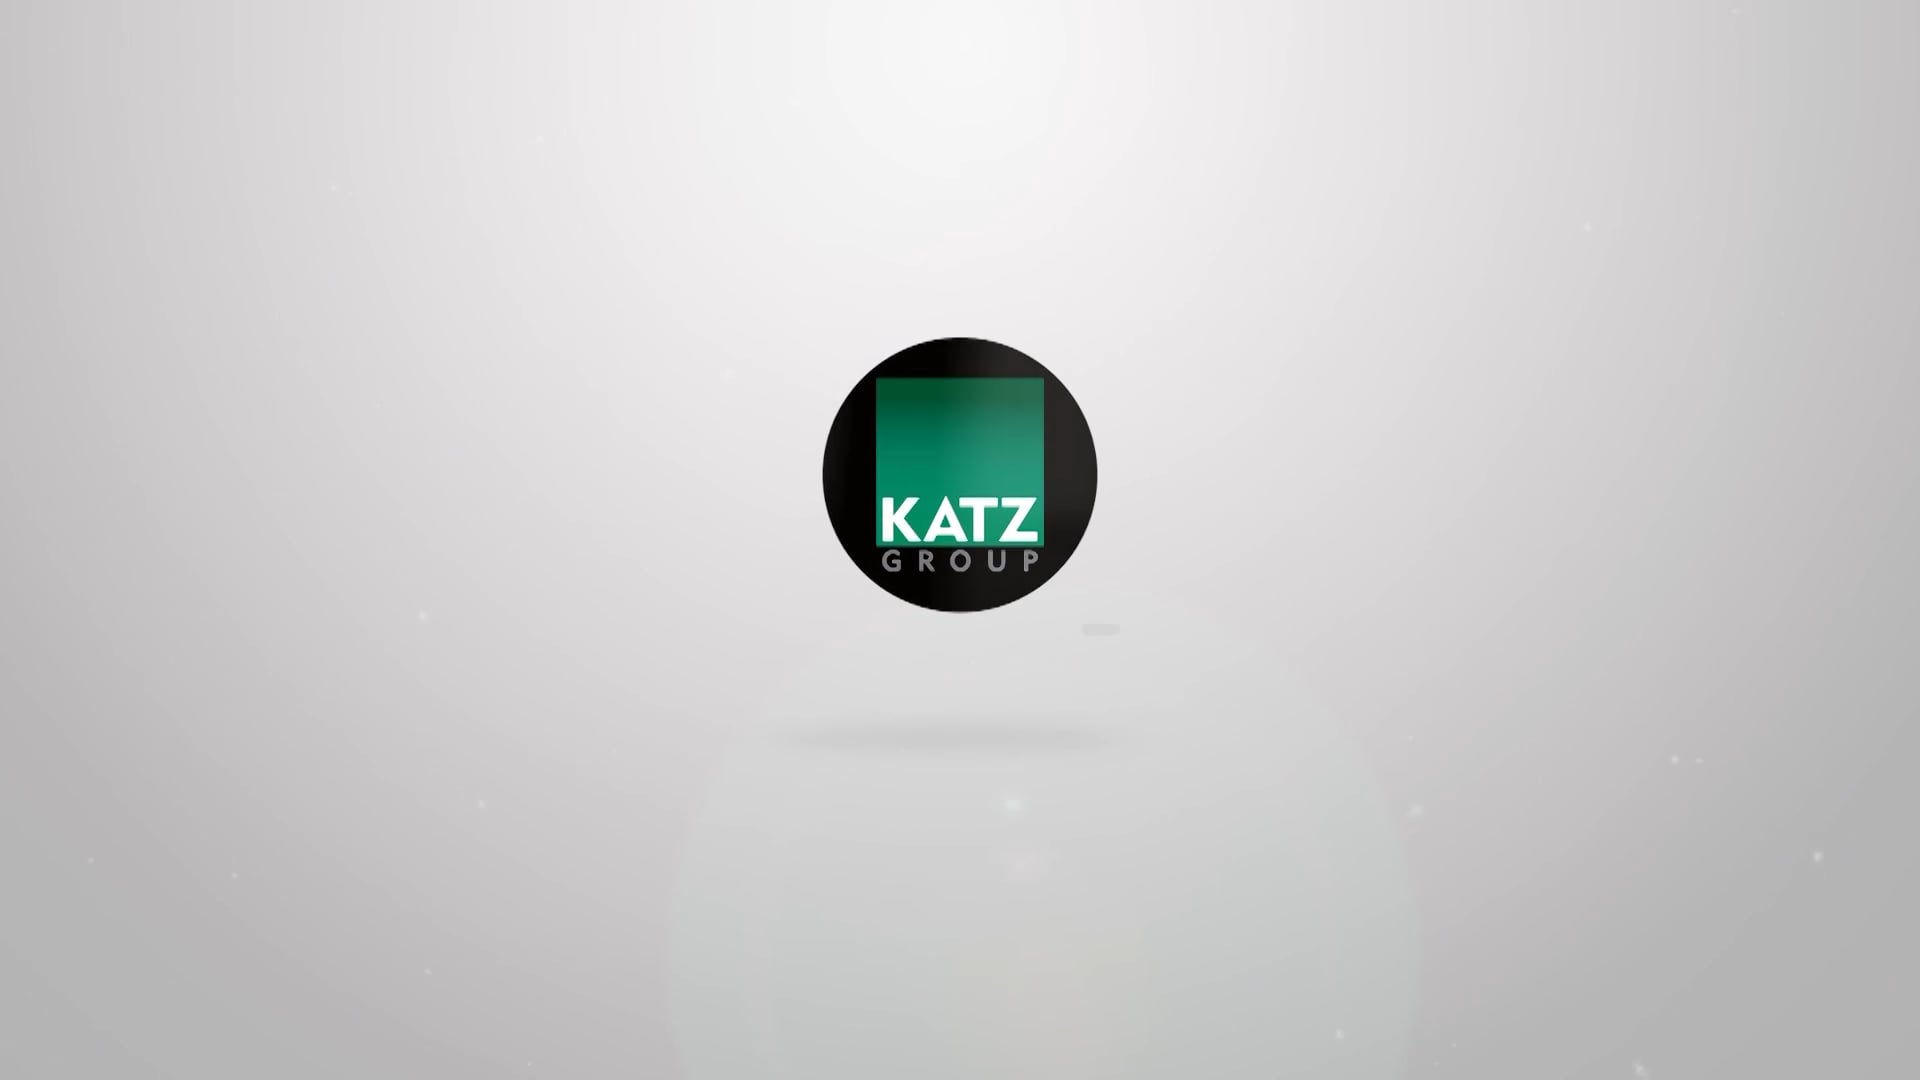 The Katz Group